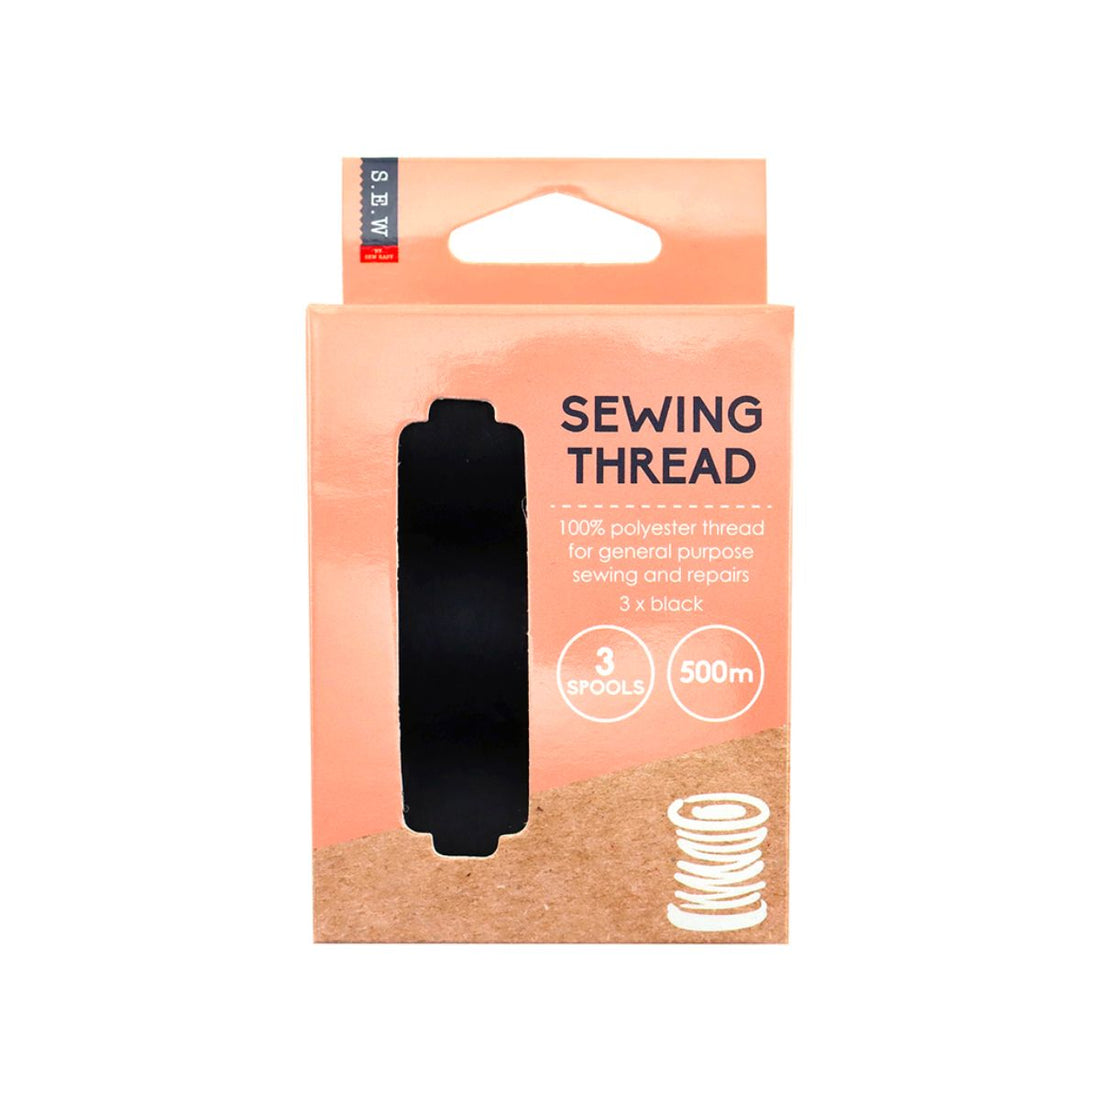 SEW thread pack of 3, black